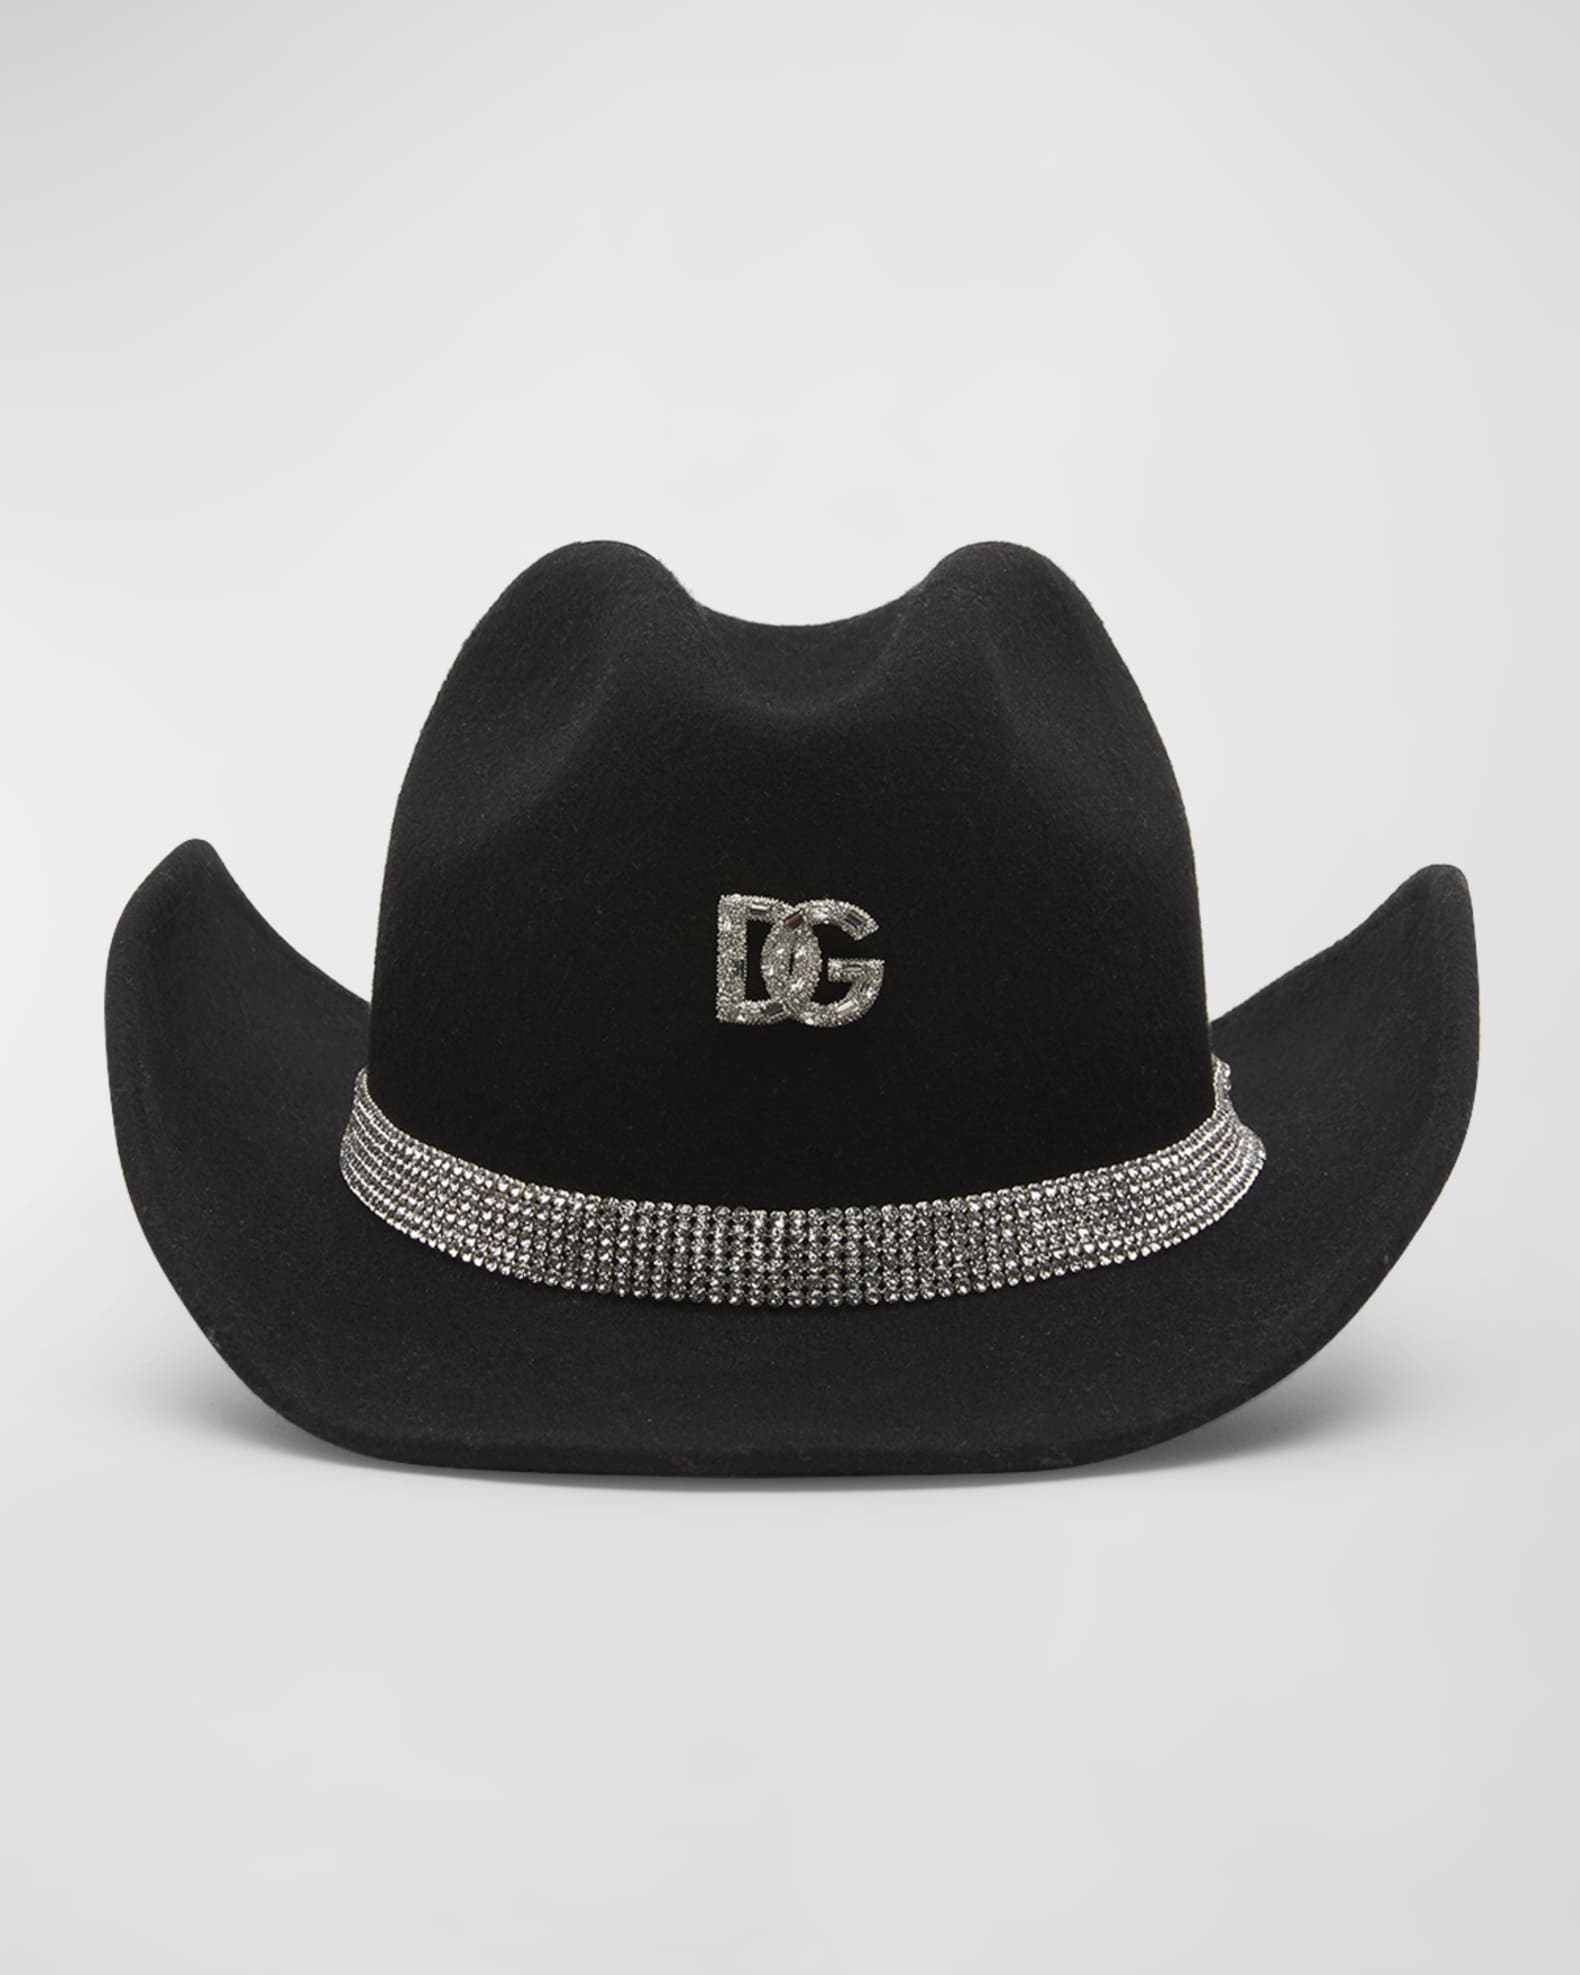 Gucci - Women’s Wide-brimmed Felt Fedora Cowboy Hat - (Beige)